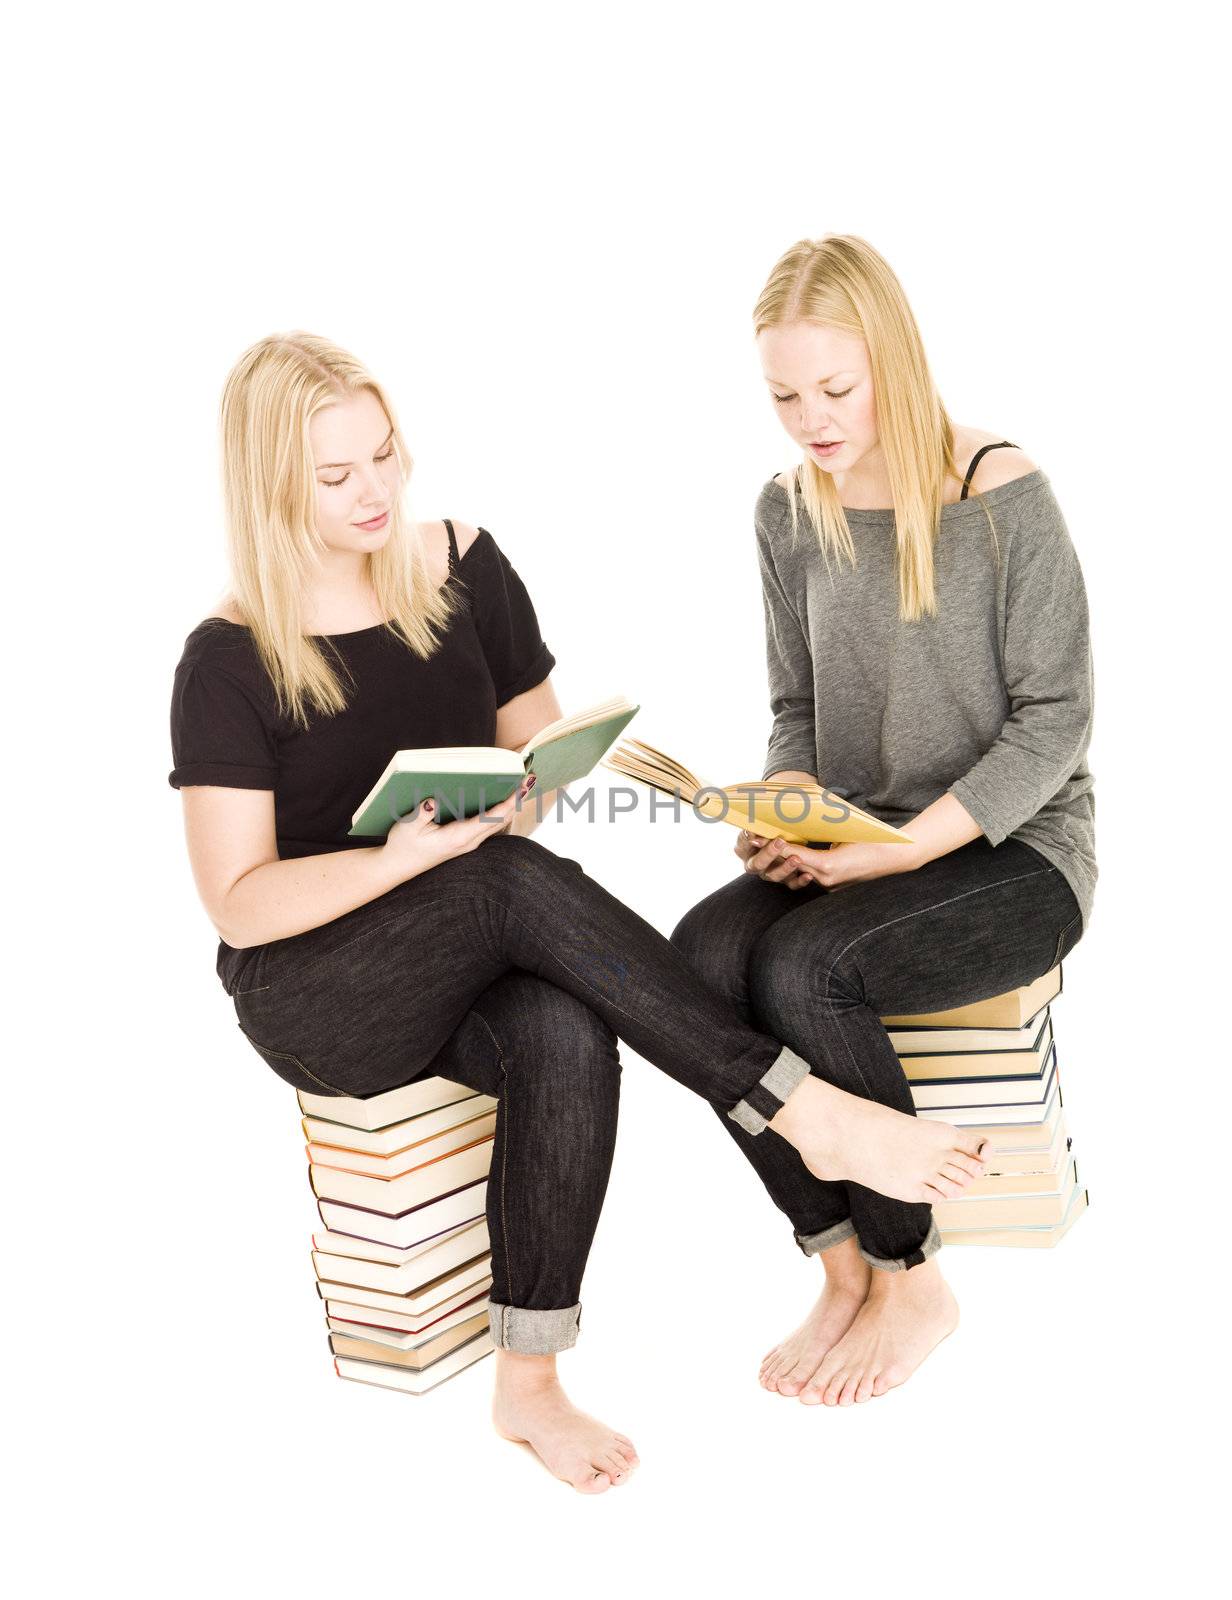 Girls sitting on piles of books reading isolated on white background